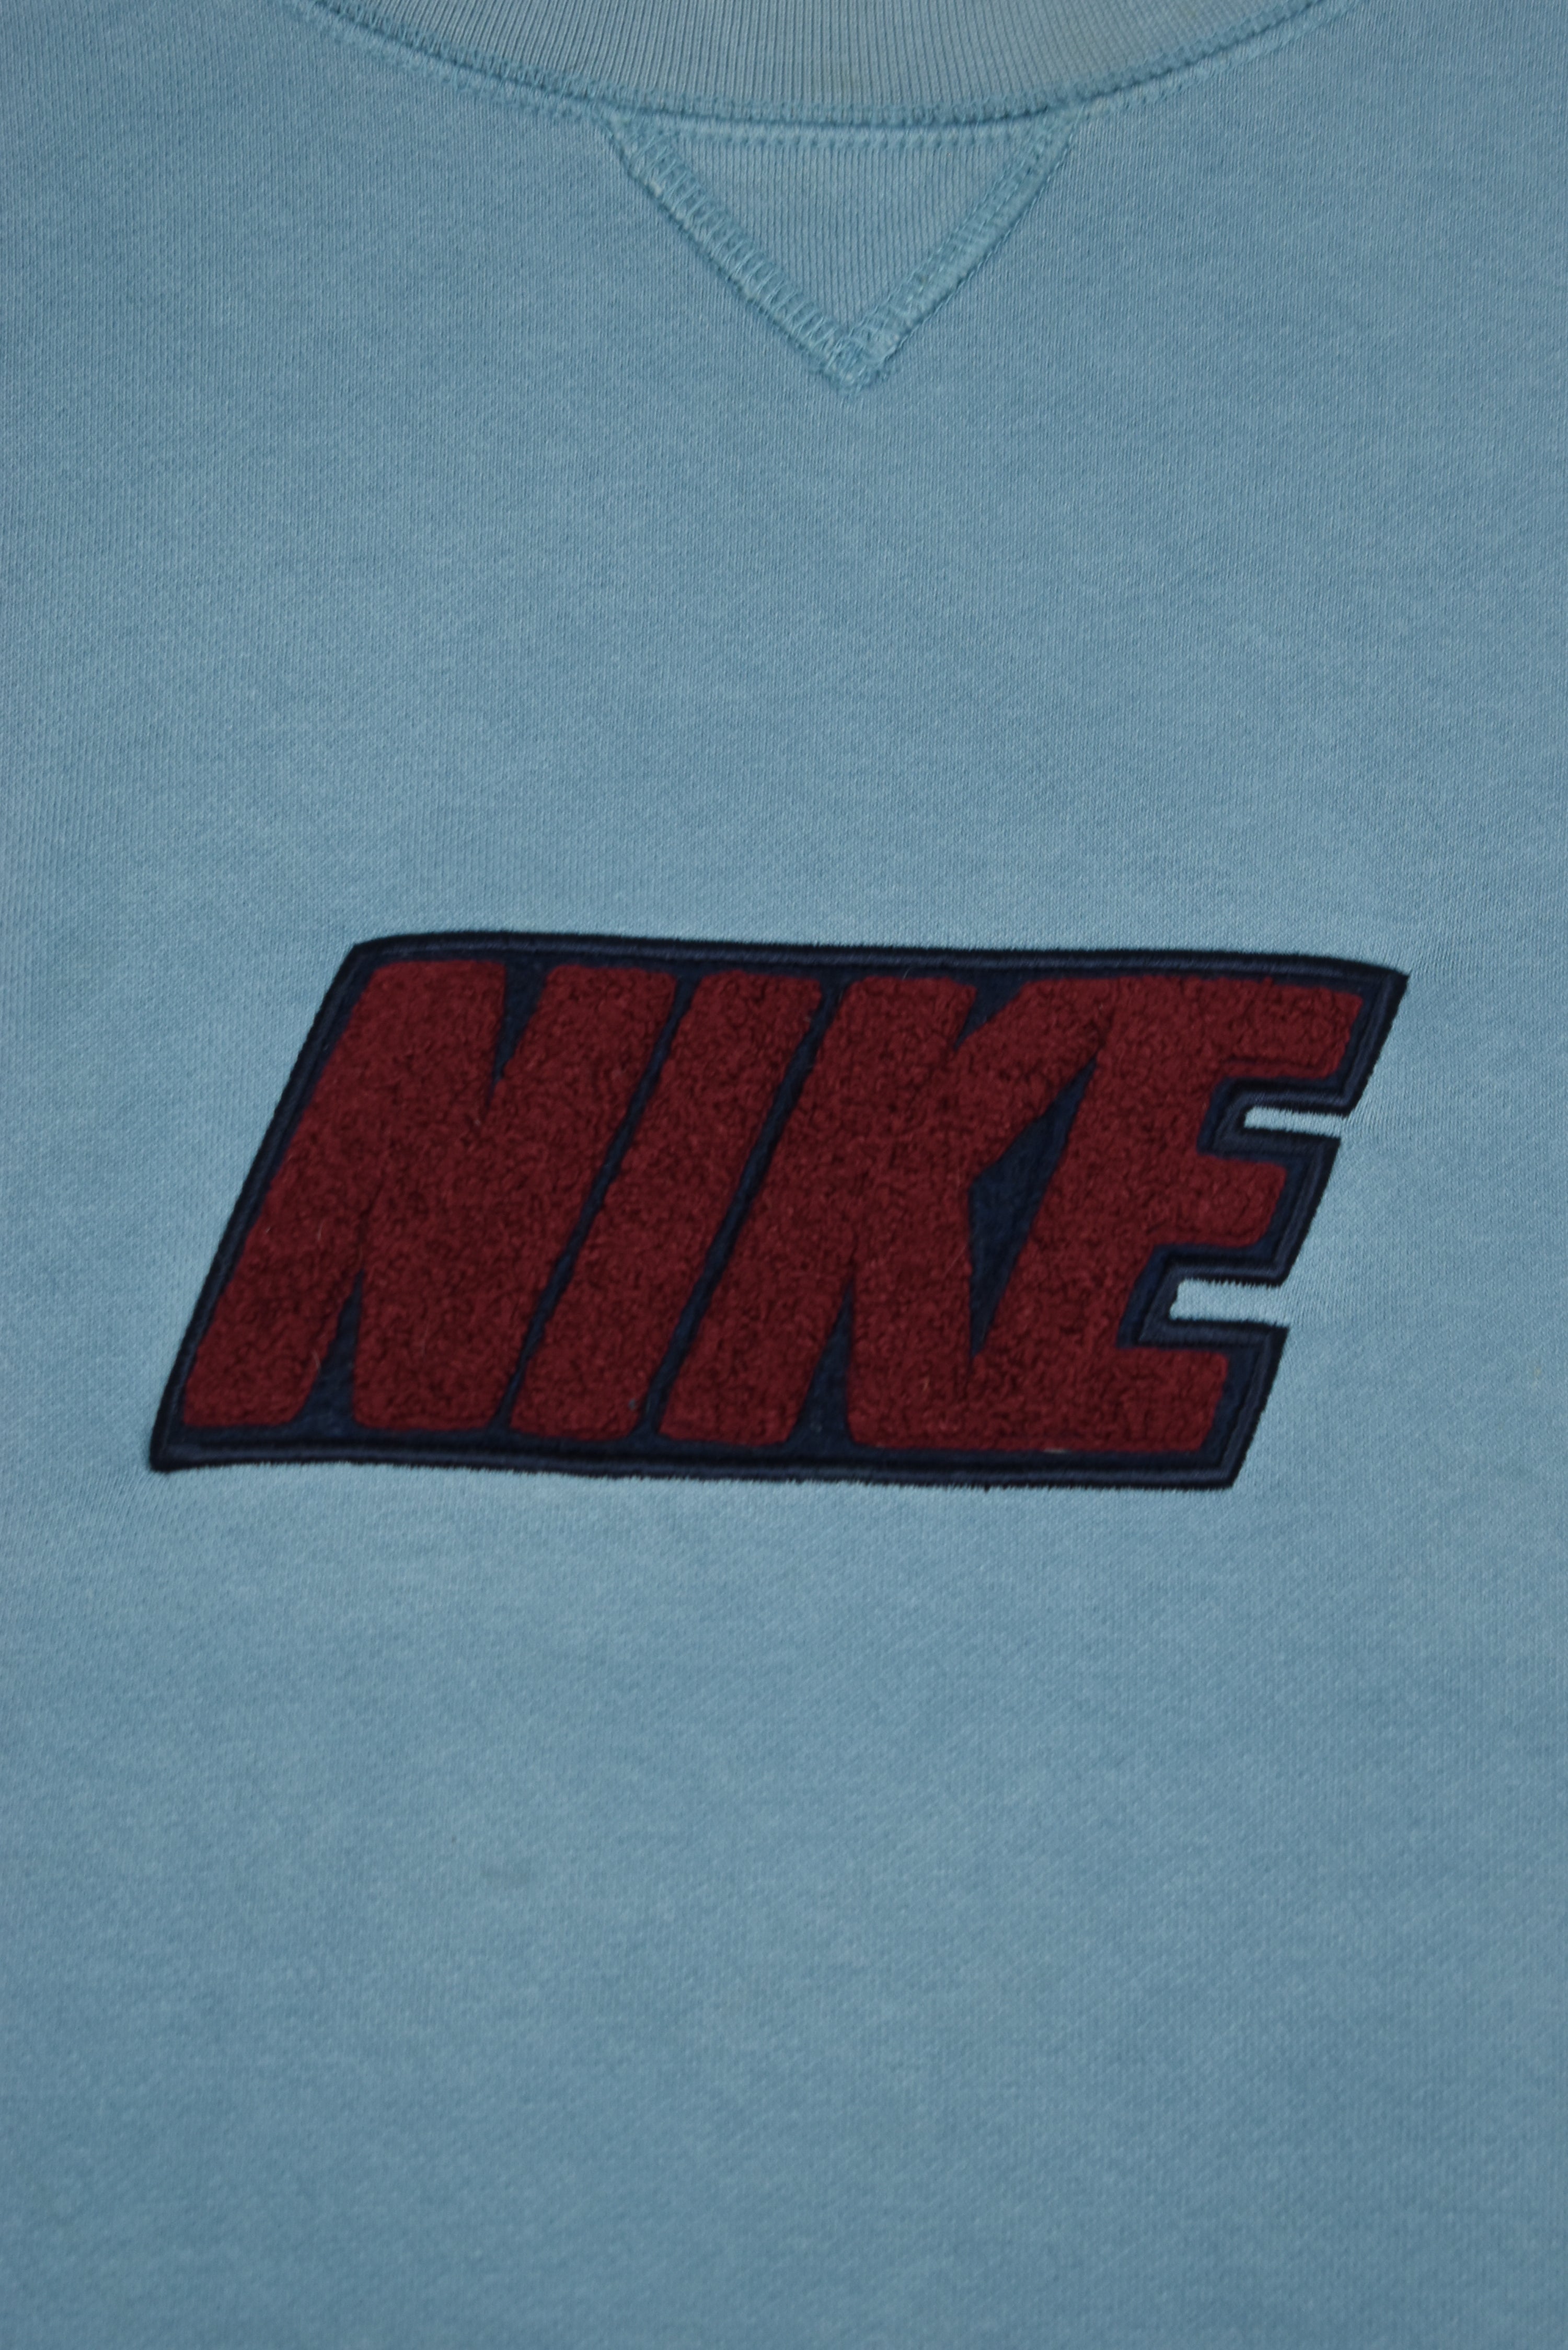 Vintage Nike Embroidered Carpet Print Sweatshirt XXL